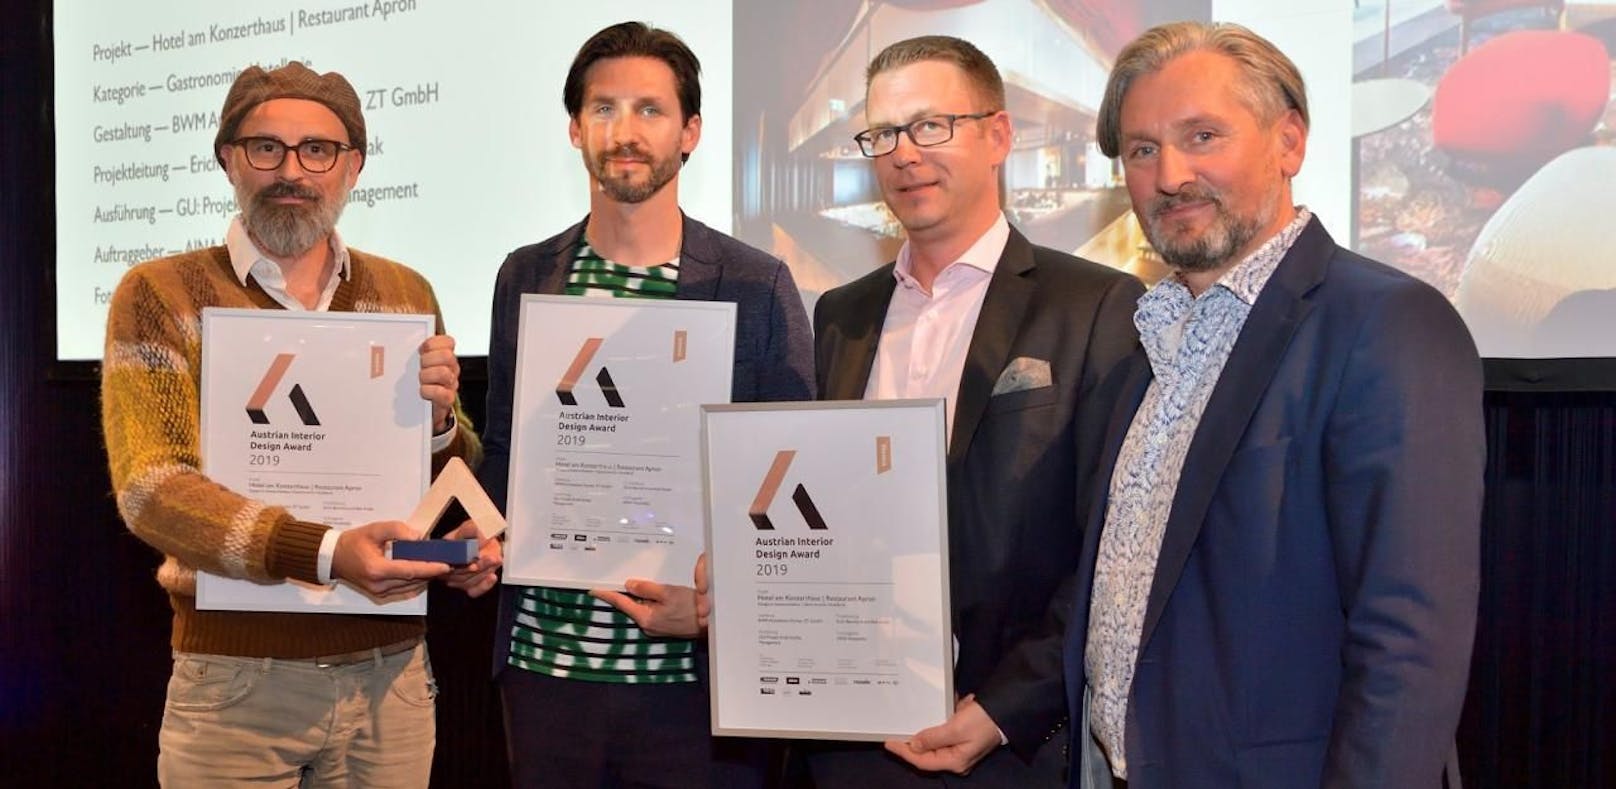 Restaurant "Apron" erhält Interior Design Award